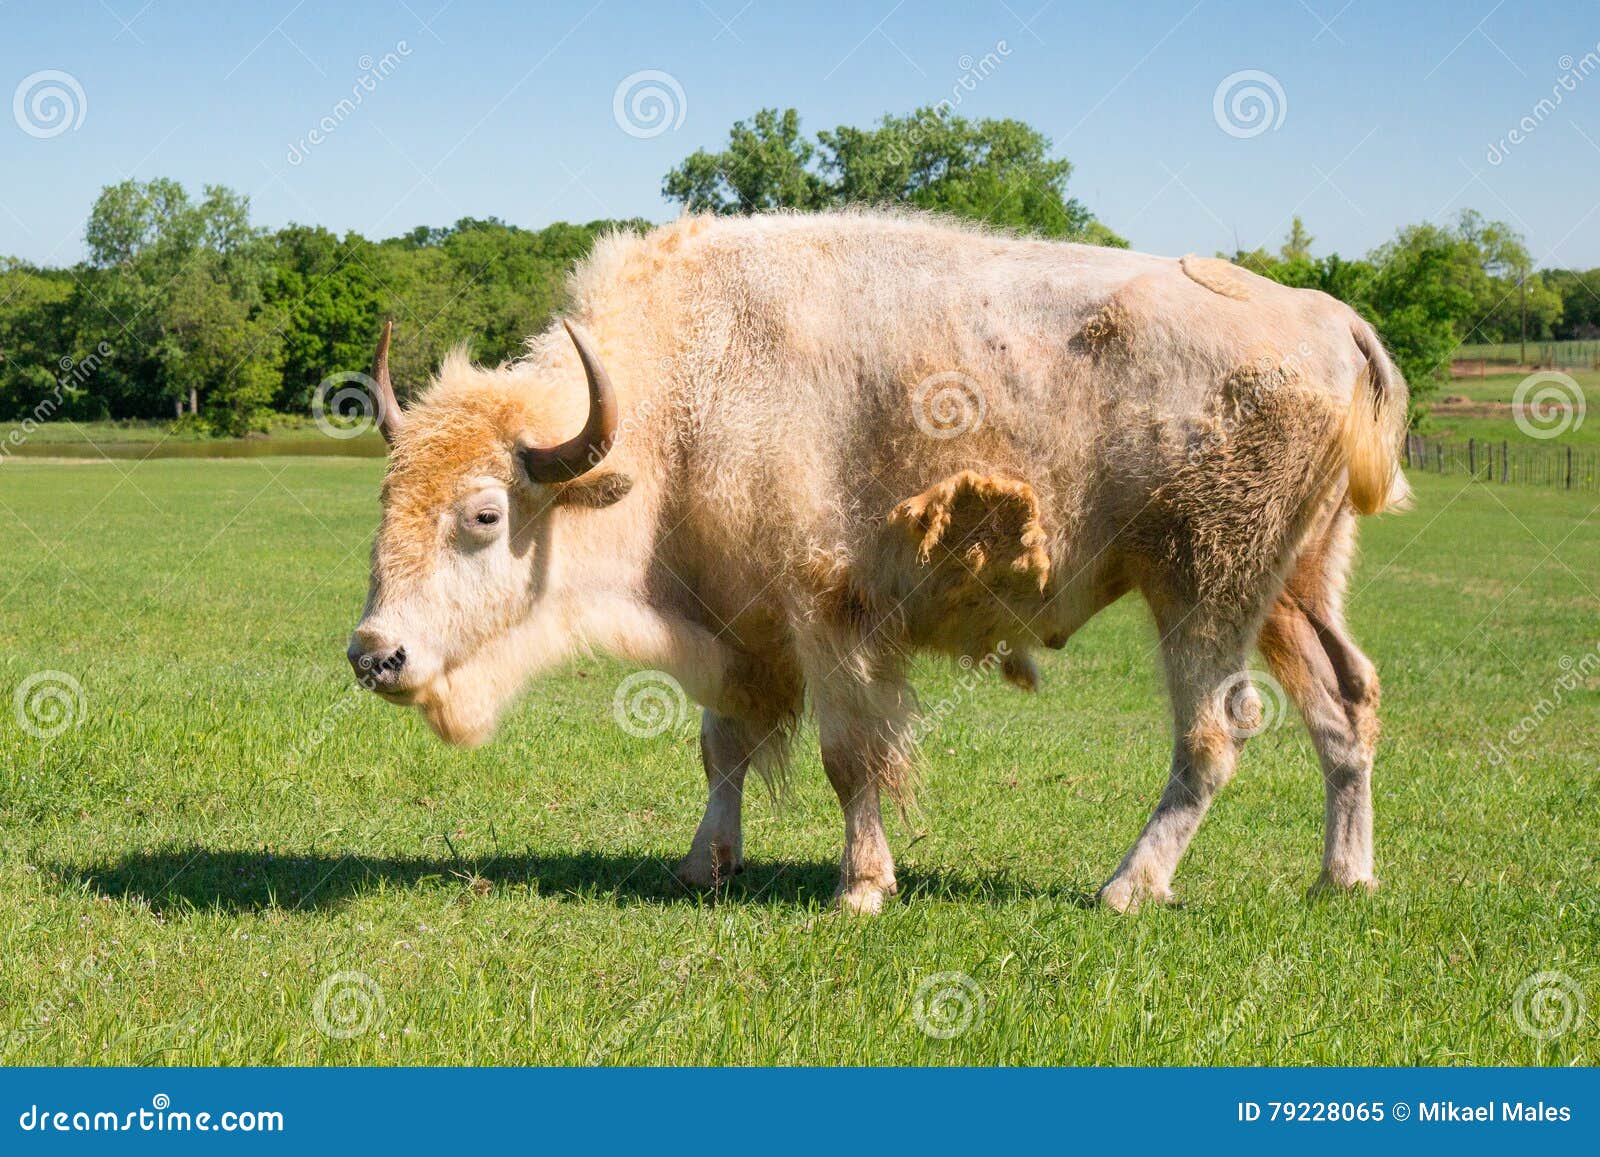 View of Rare Buffalo Stock Image - Image of native, 79228065